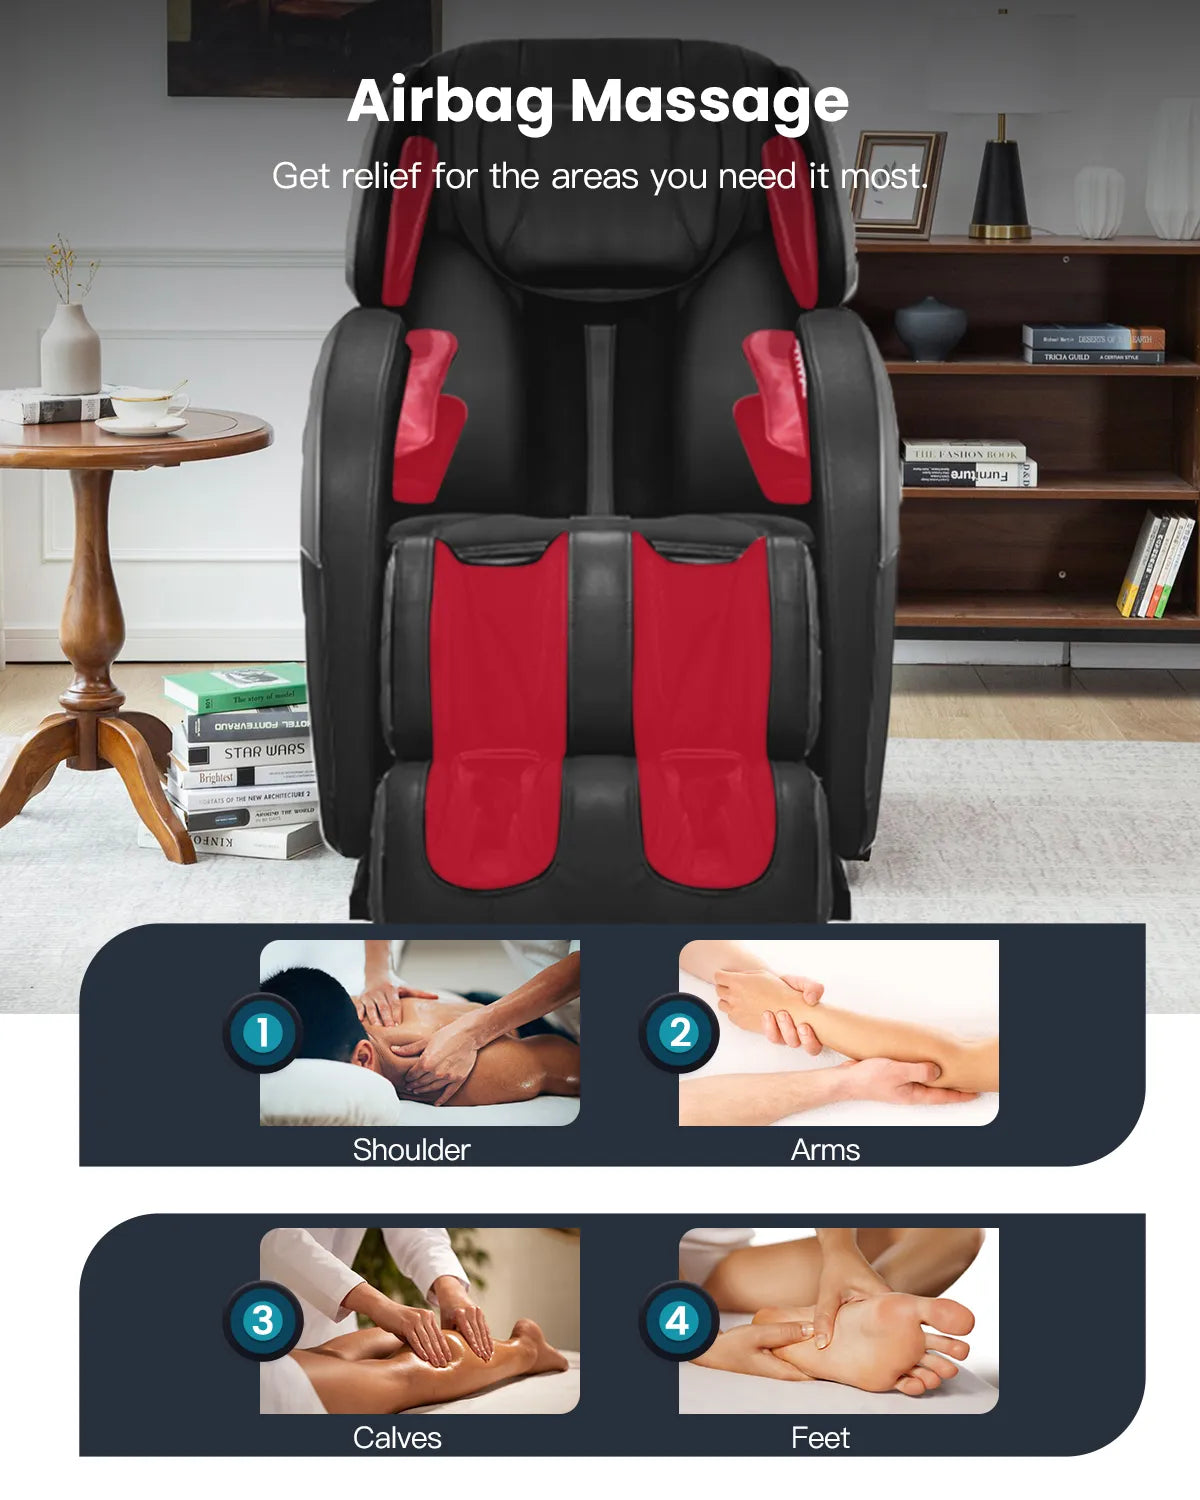 Serenity 2D Zero Gravity Massage Chair